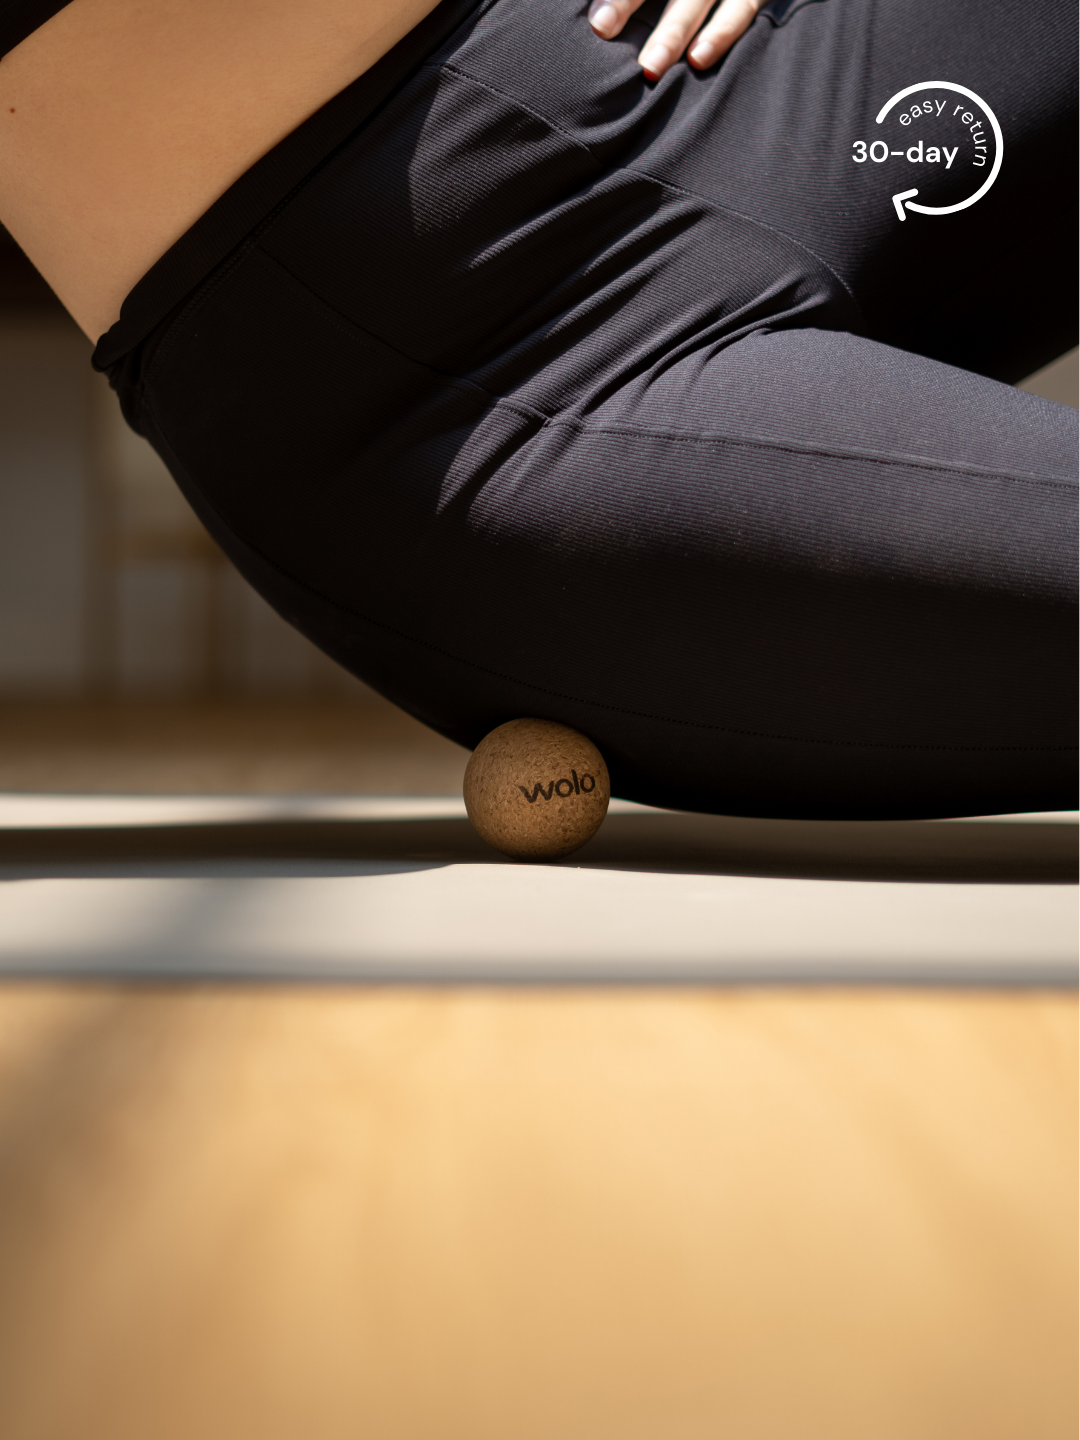 Release hip tension using a cork massage ball